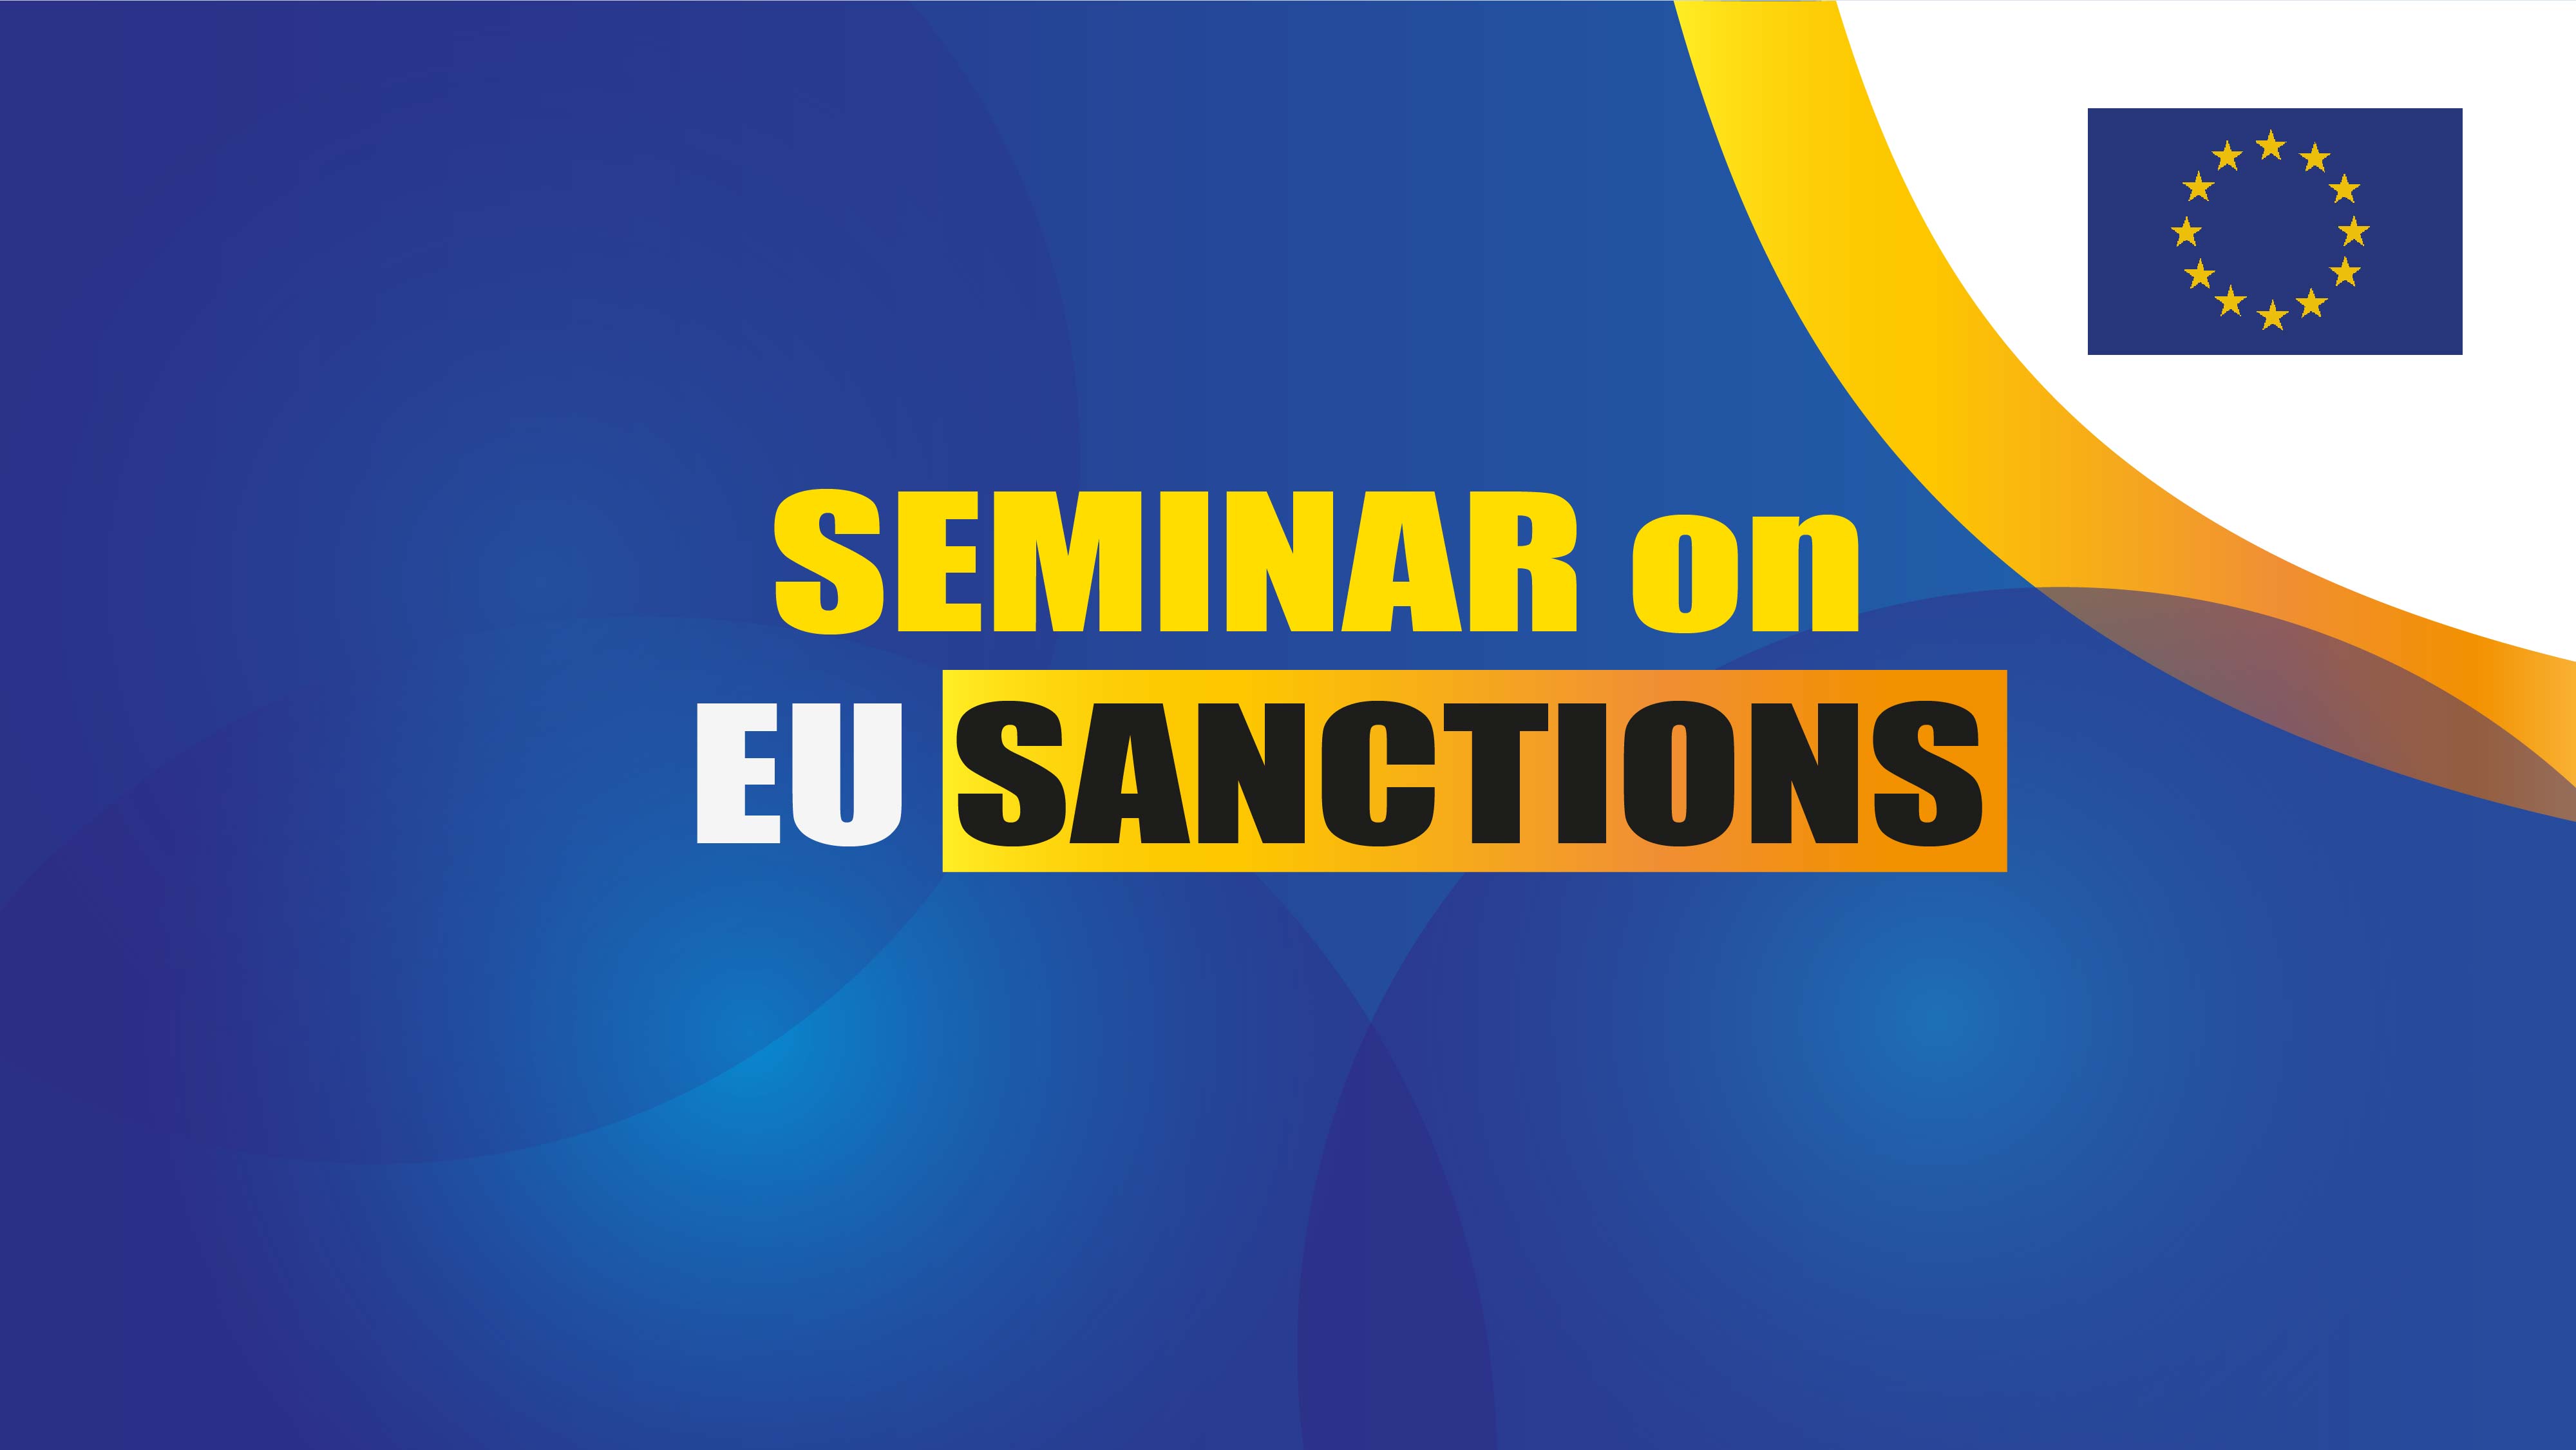 ISTC and European Union organised training workshops in Uzbekistan on EU sanctions